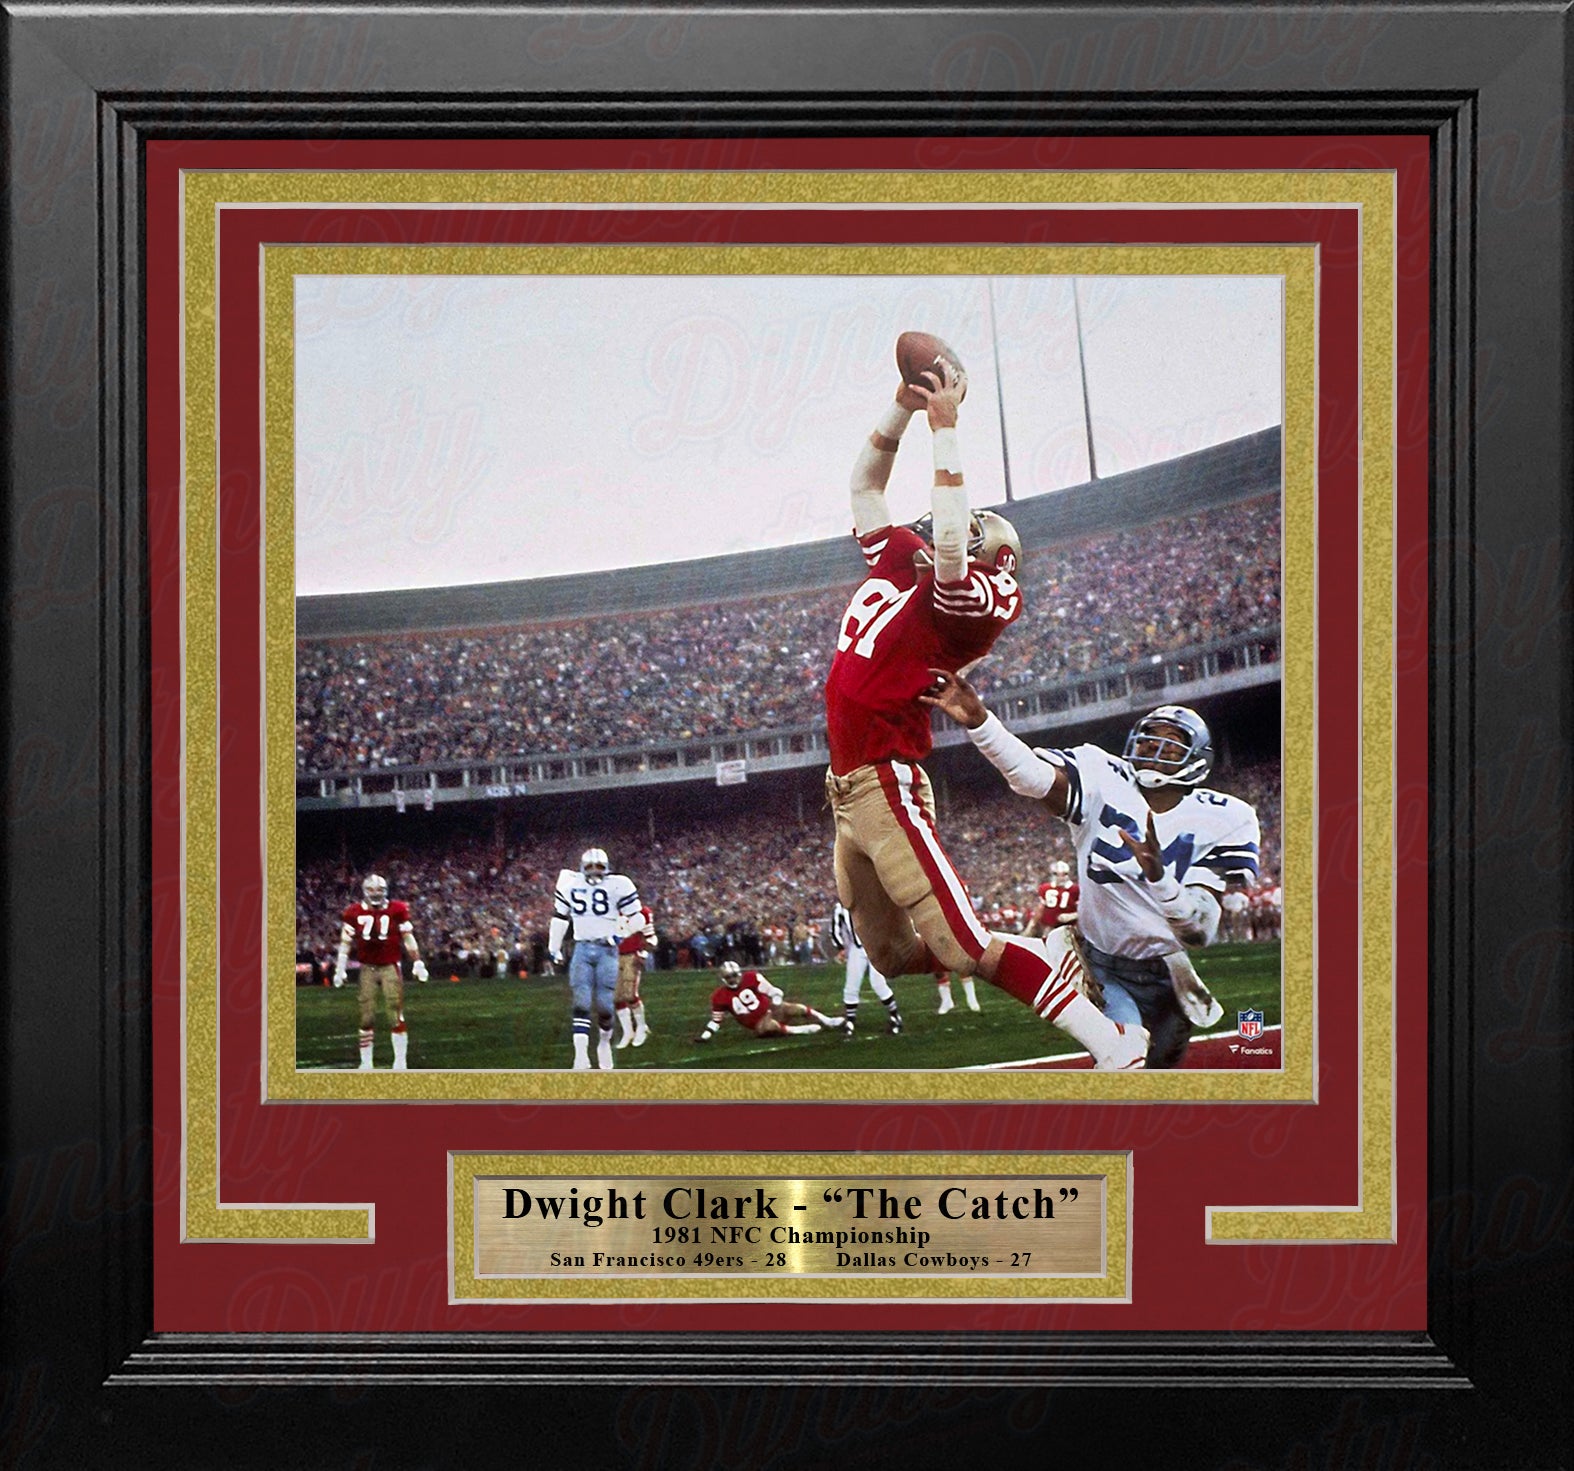 Dwight Clark 1981 NFC Championship Catch San Francisco 49ers 8x10 Framed Photo - Dynasty Sports & Framing 